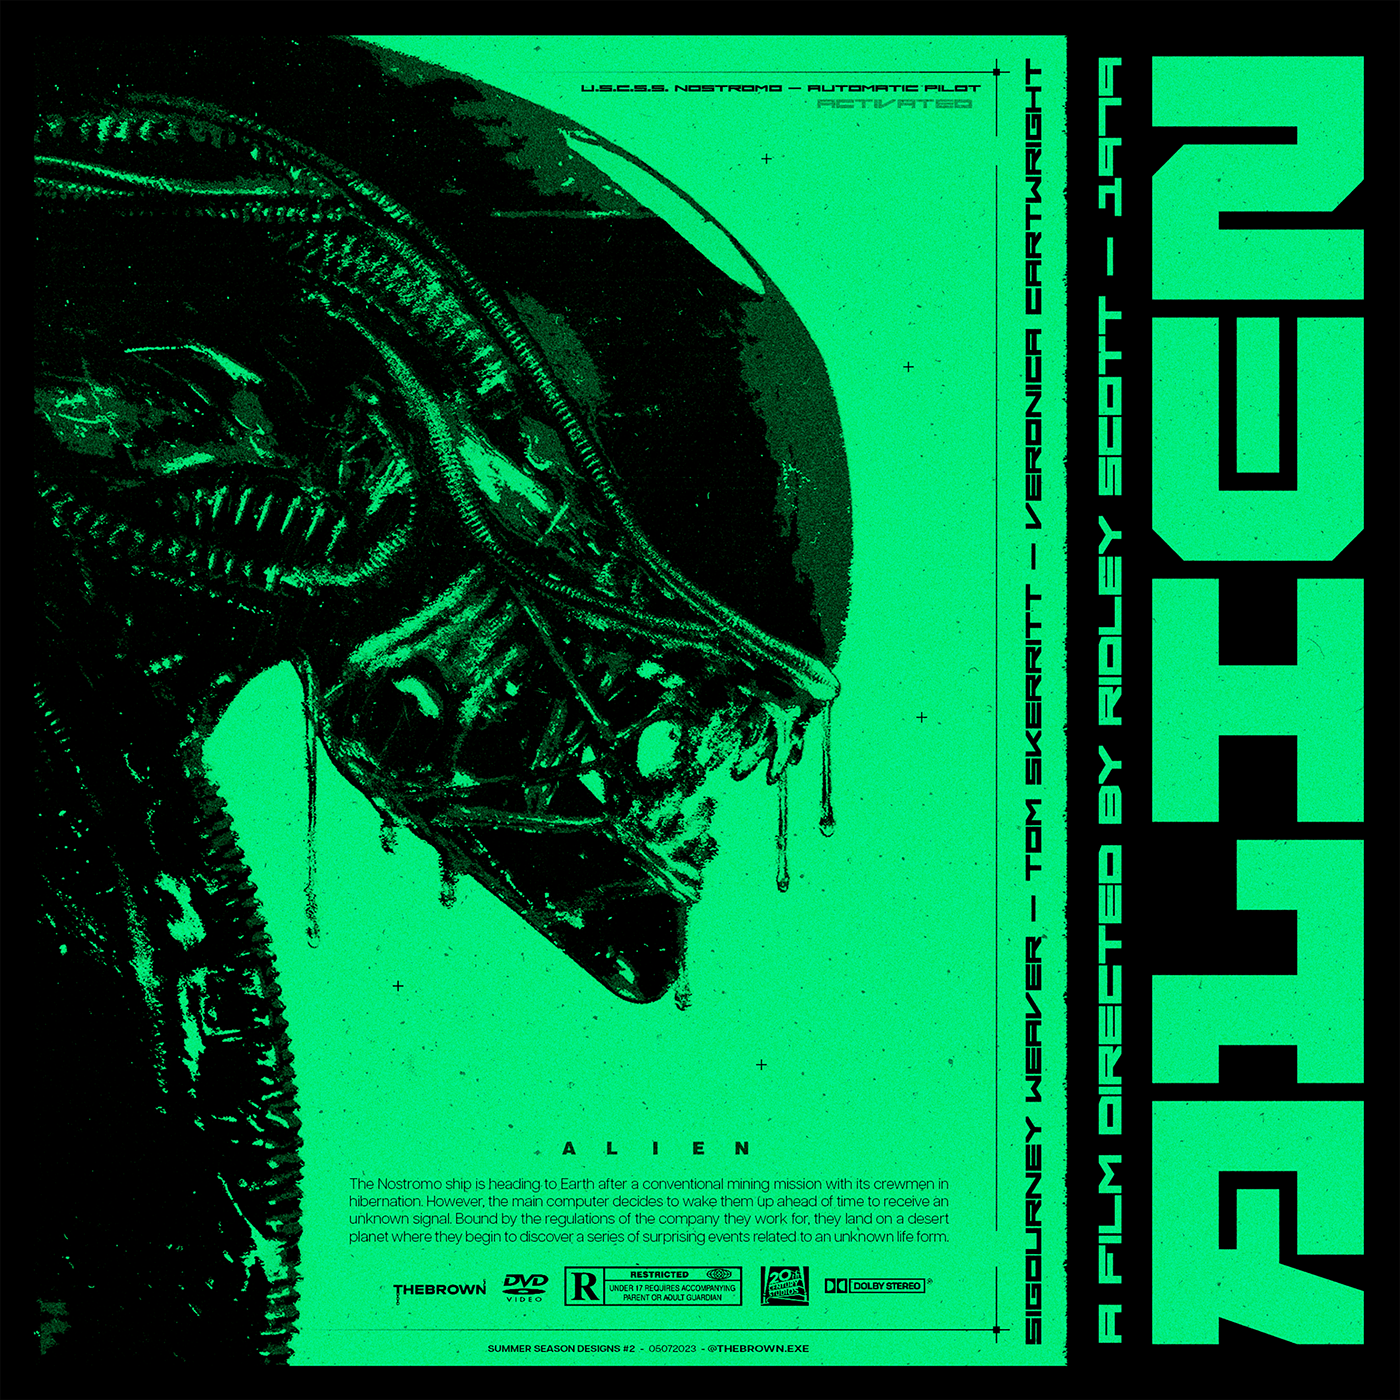 alien Ridley Scott design cover artwork Digital Art  vector graphic design  textures agressive